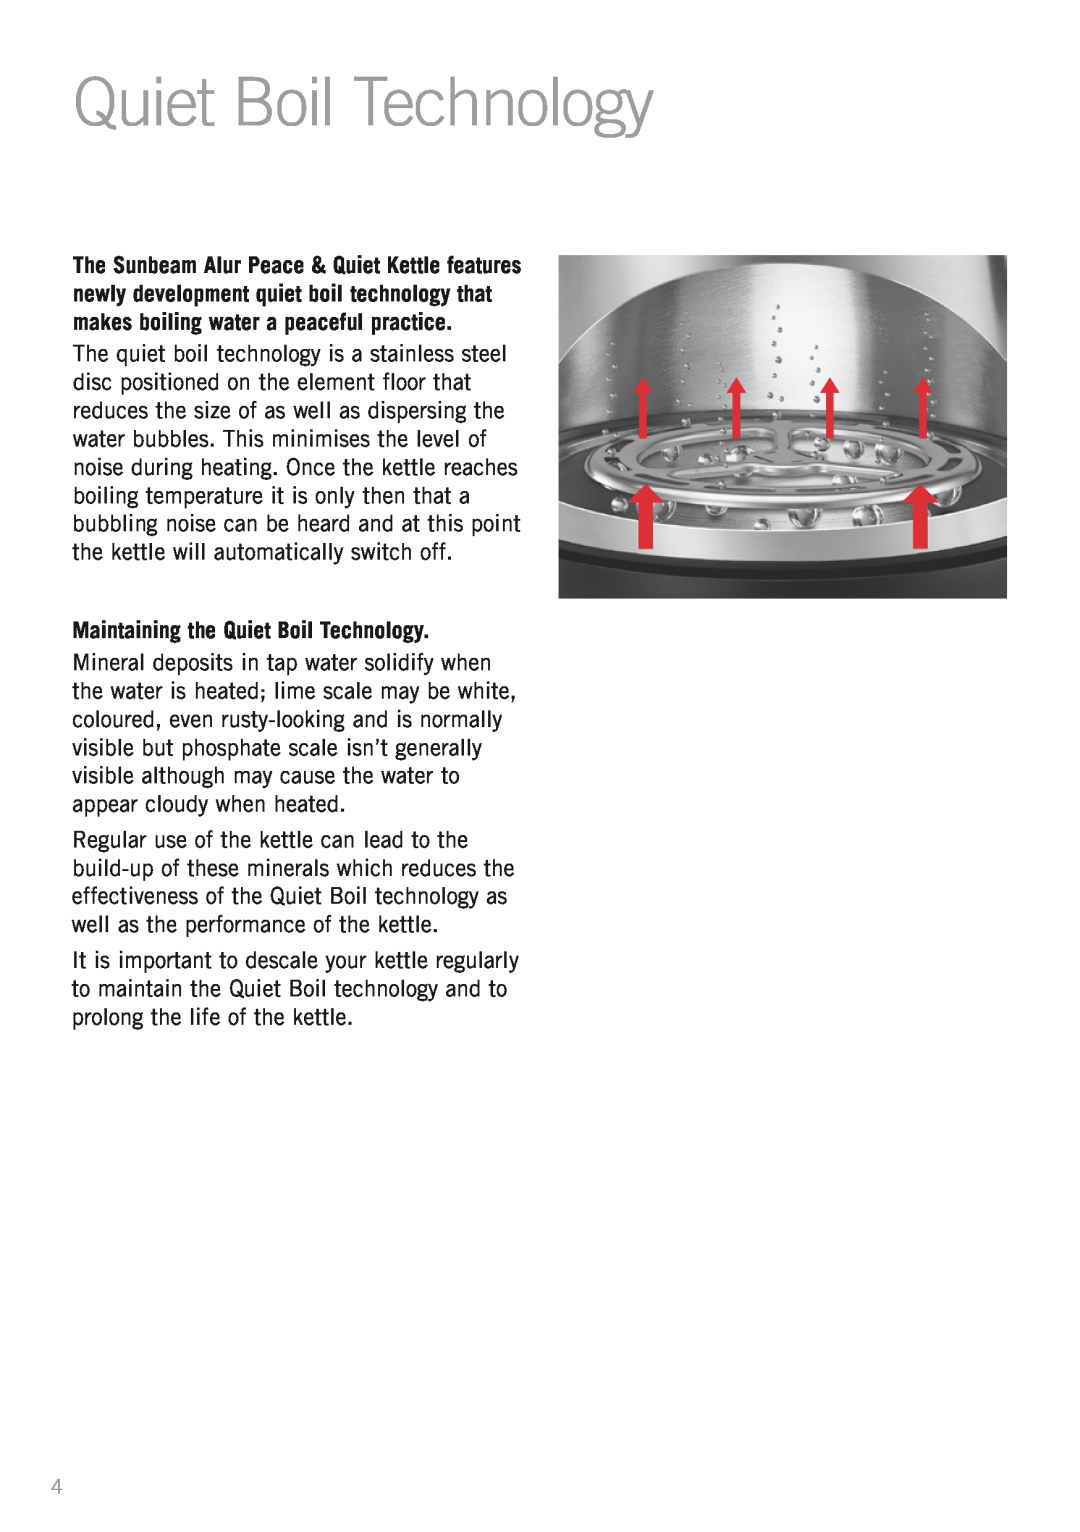 Sunbeam KE7500S manual Maintaining the Quiet Boil Technology 